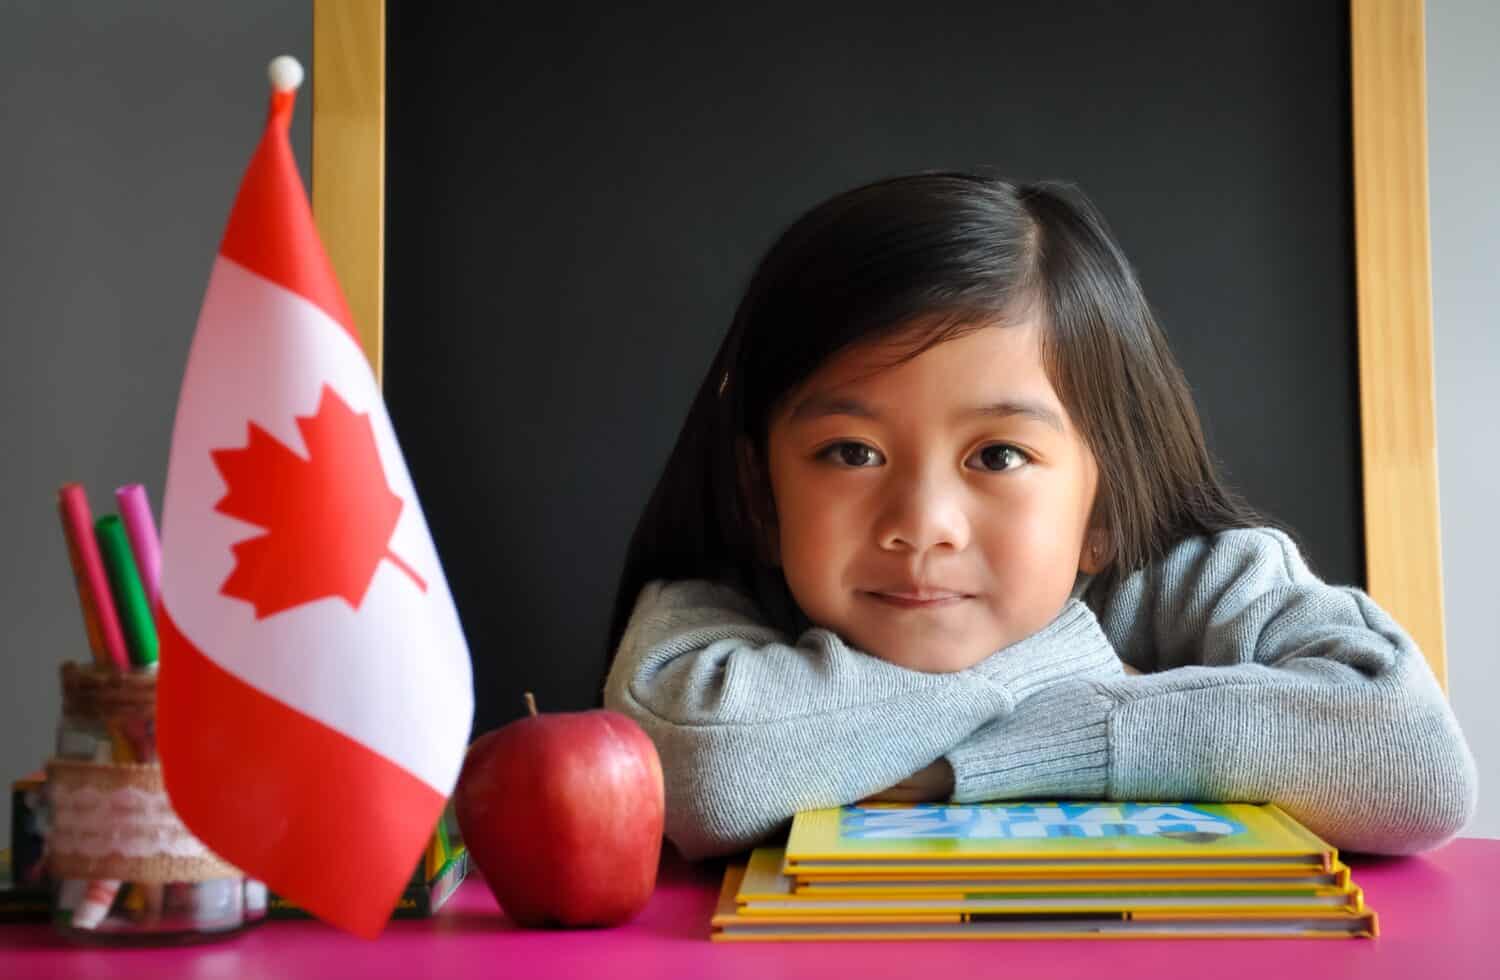 Beautiful Canadian girl sitting behind her school desk